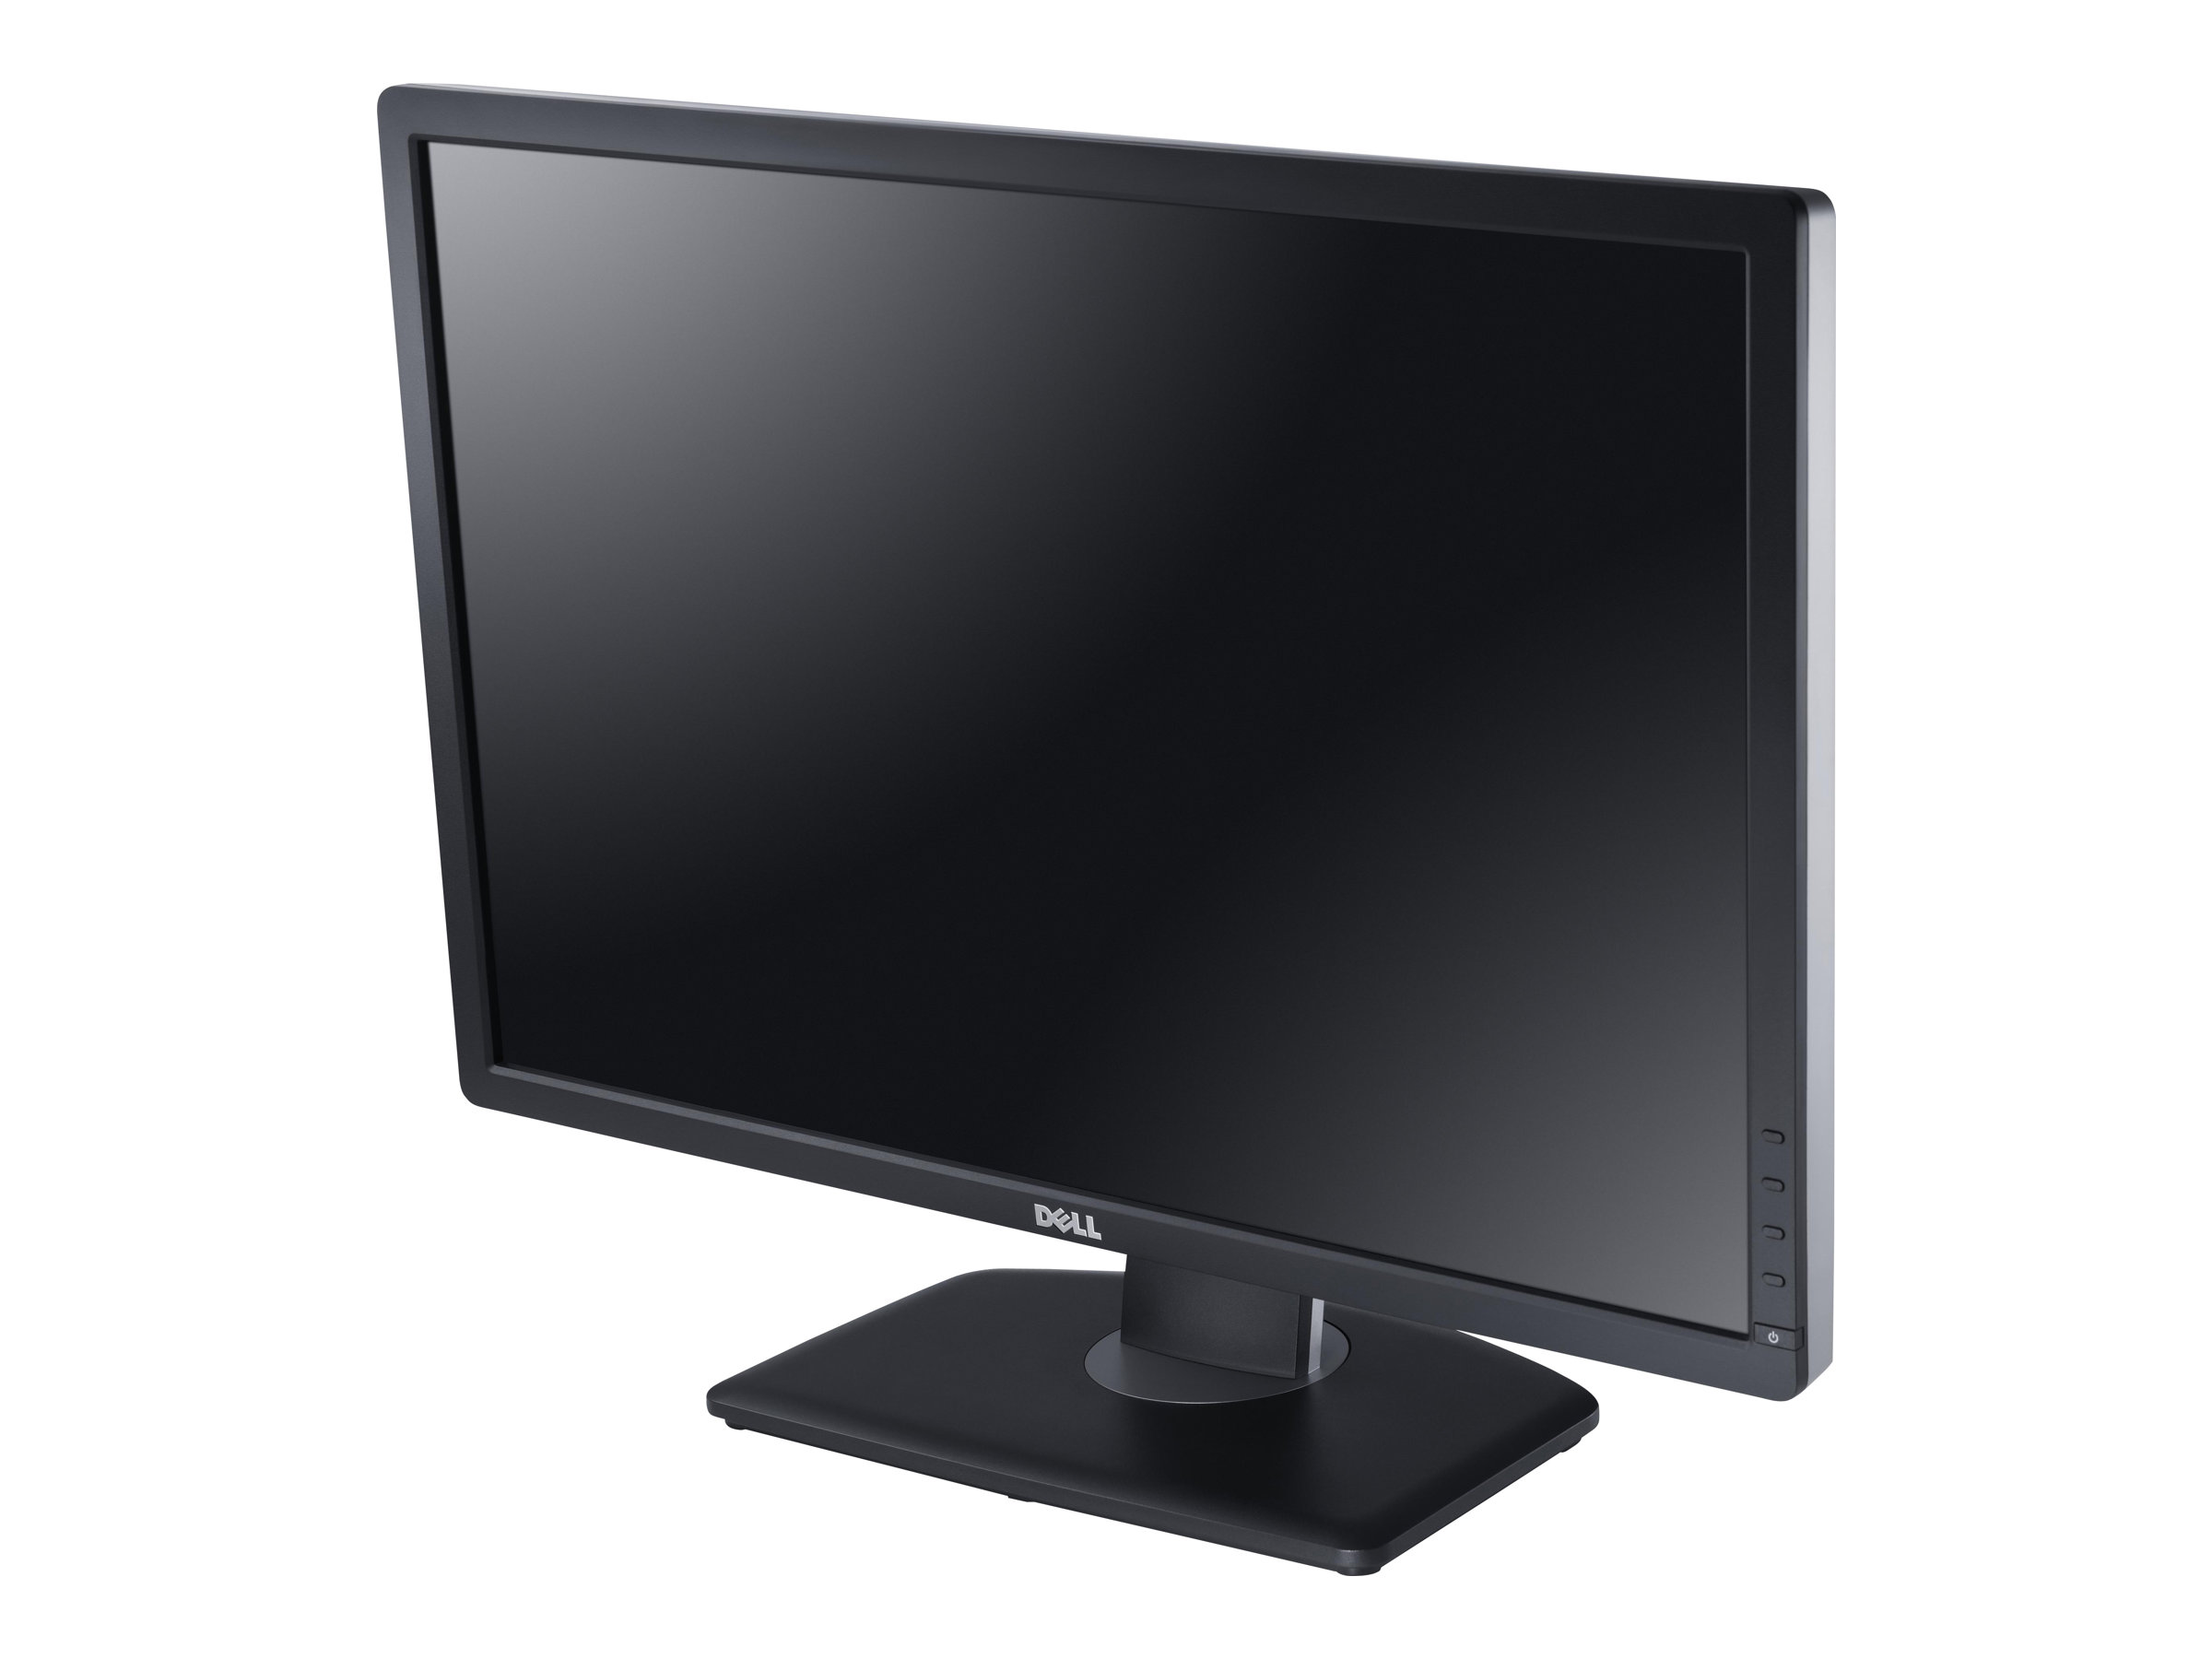 Dell UltraSharp U2412M - LED monitor - 24" - image 2 of 9